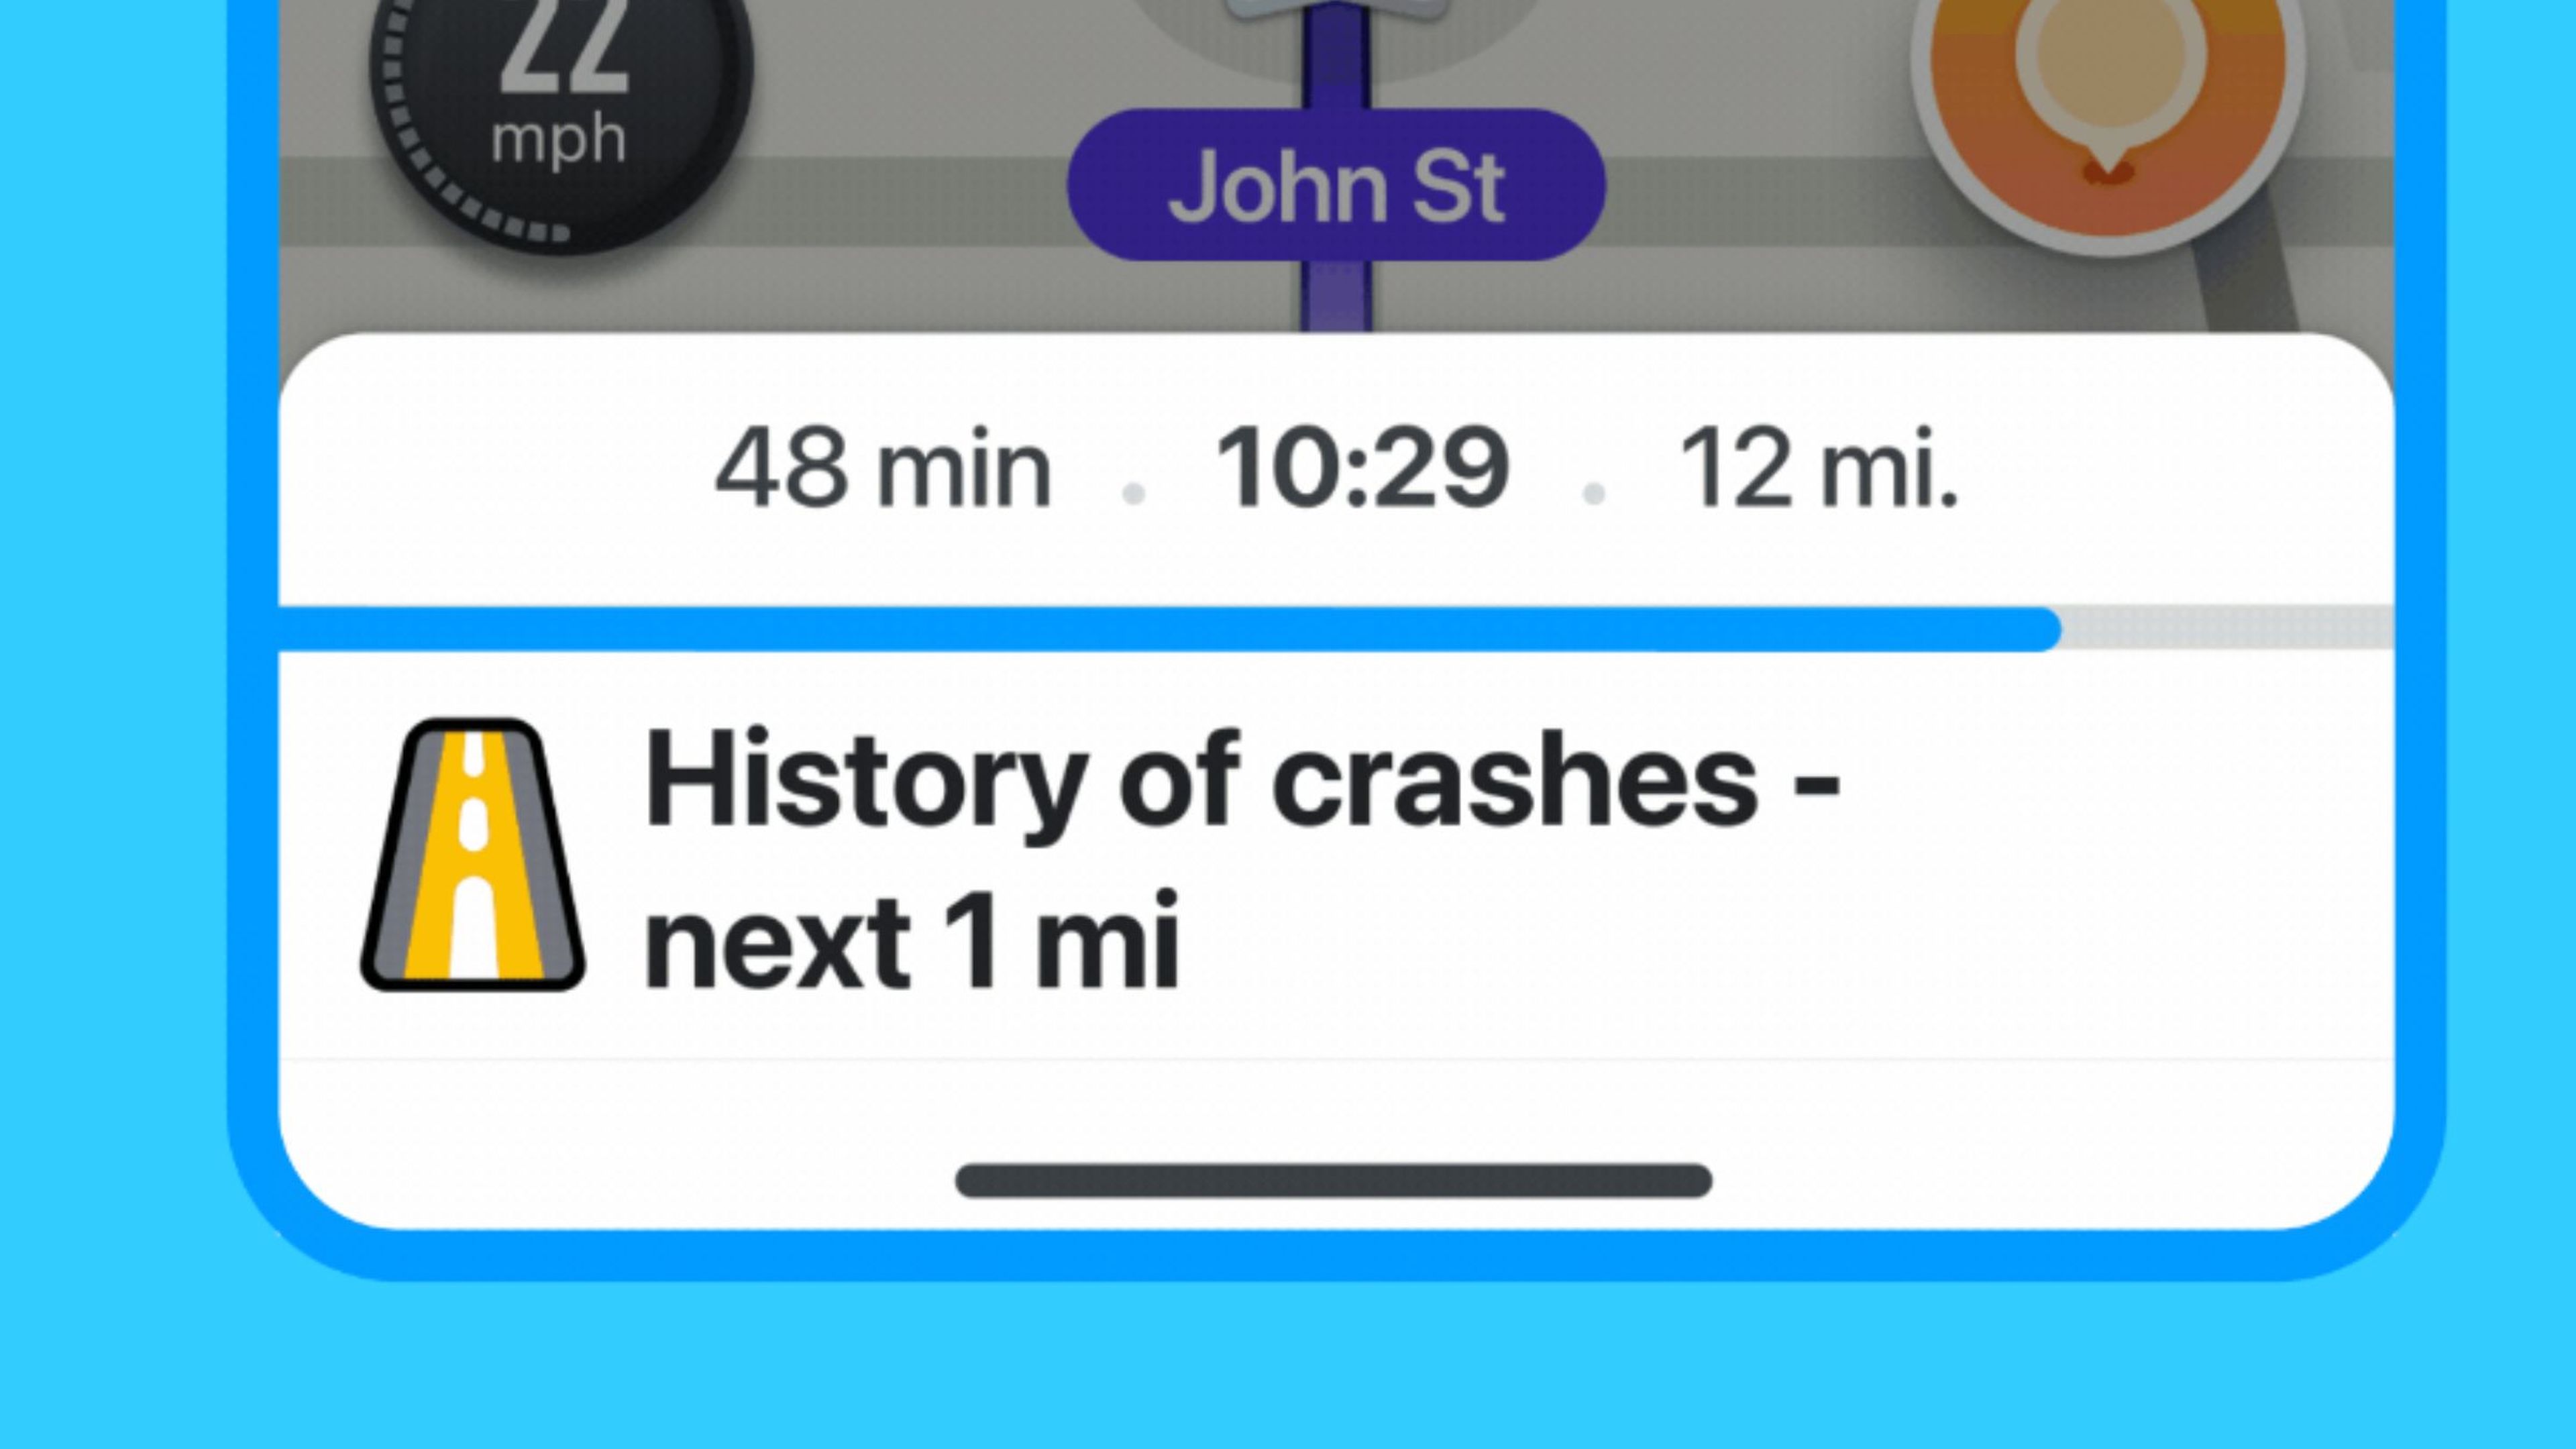 Waze vuelve a adelantar a Google Maps: ahora avisa del historial de accidentes de las carreteras